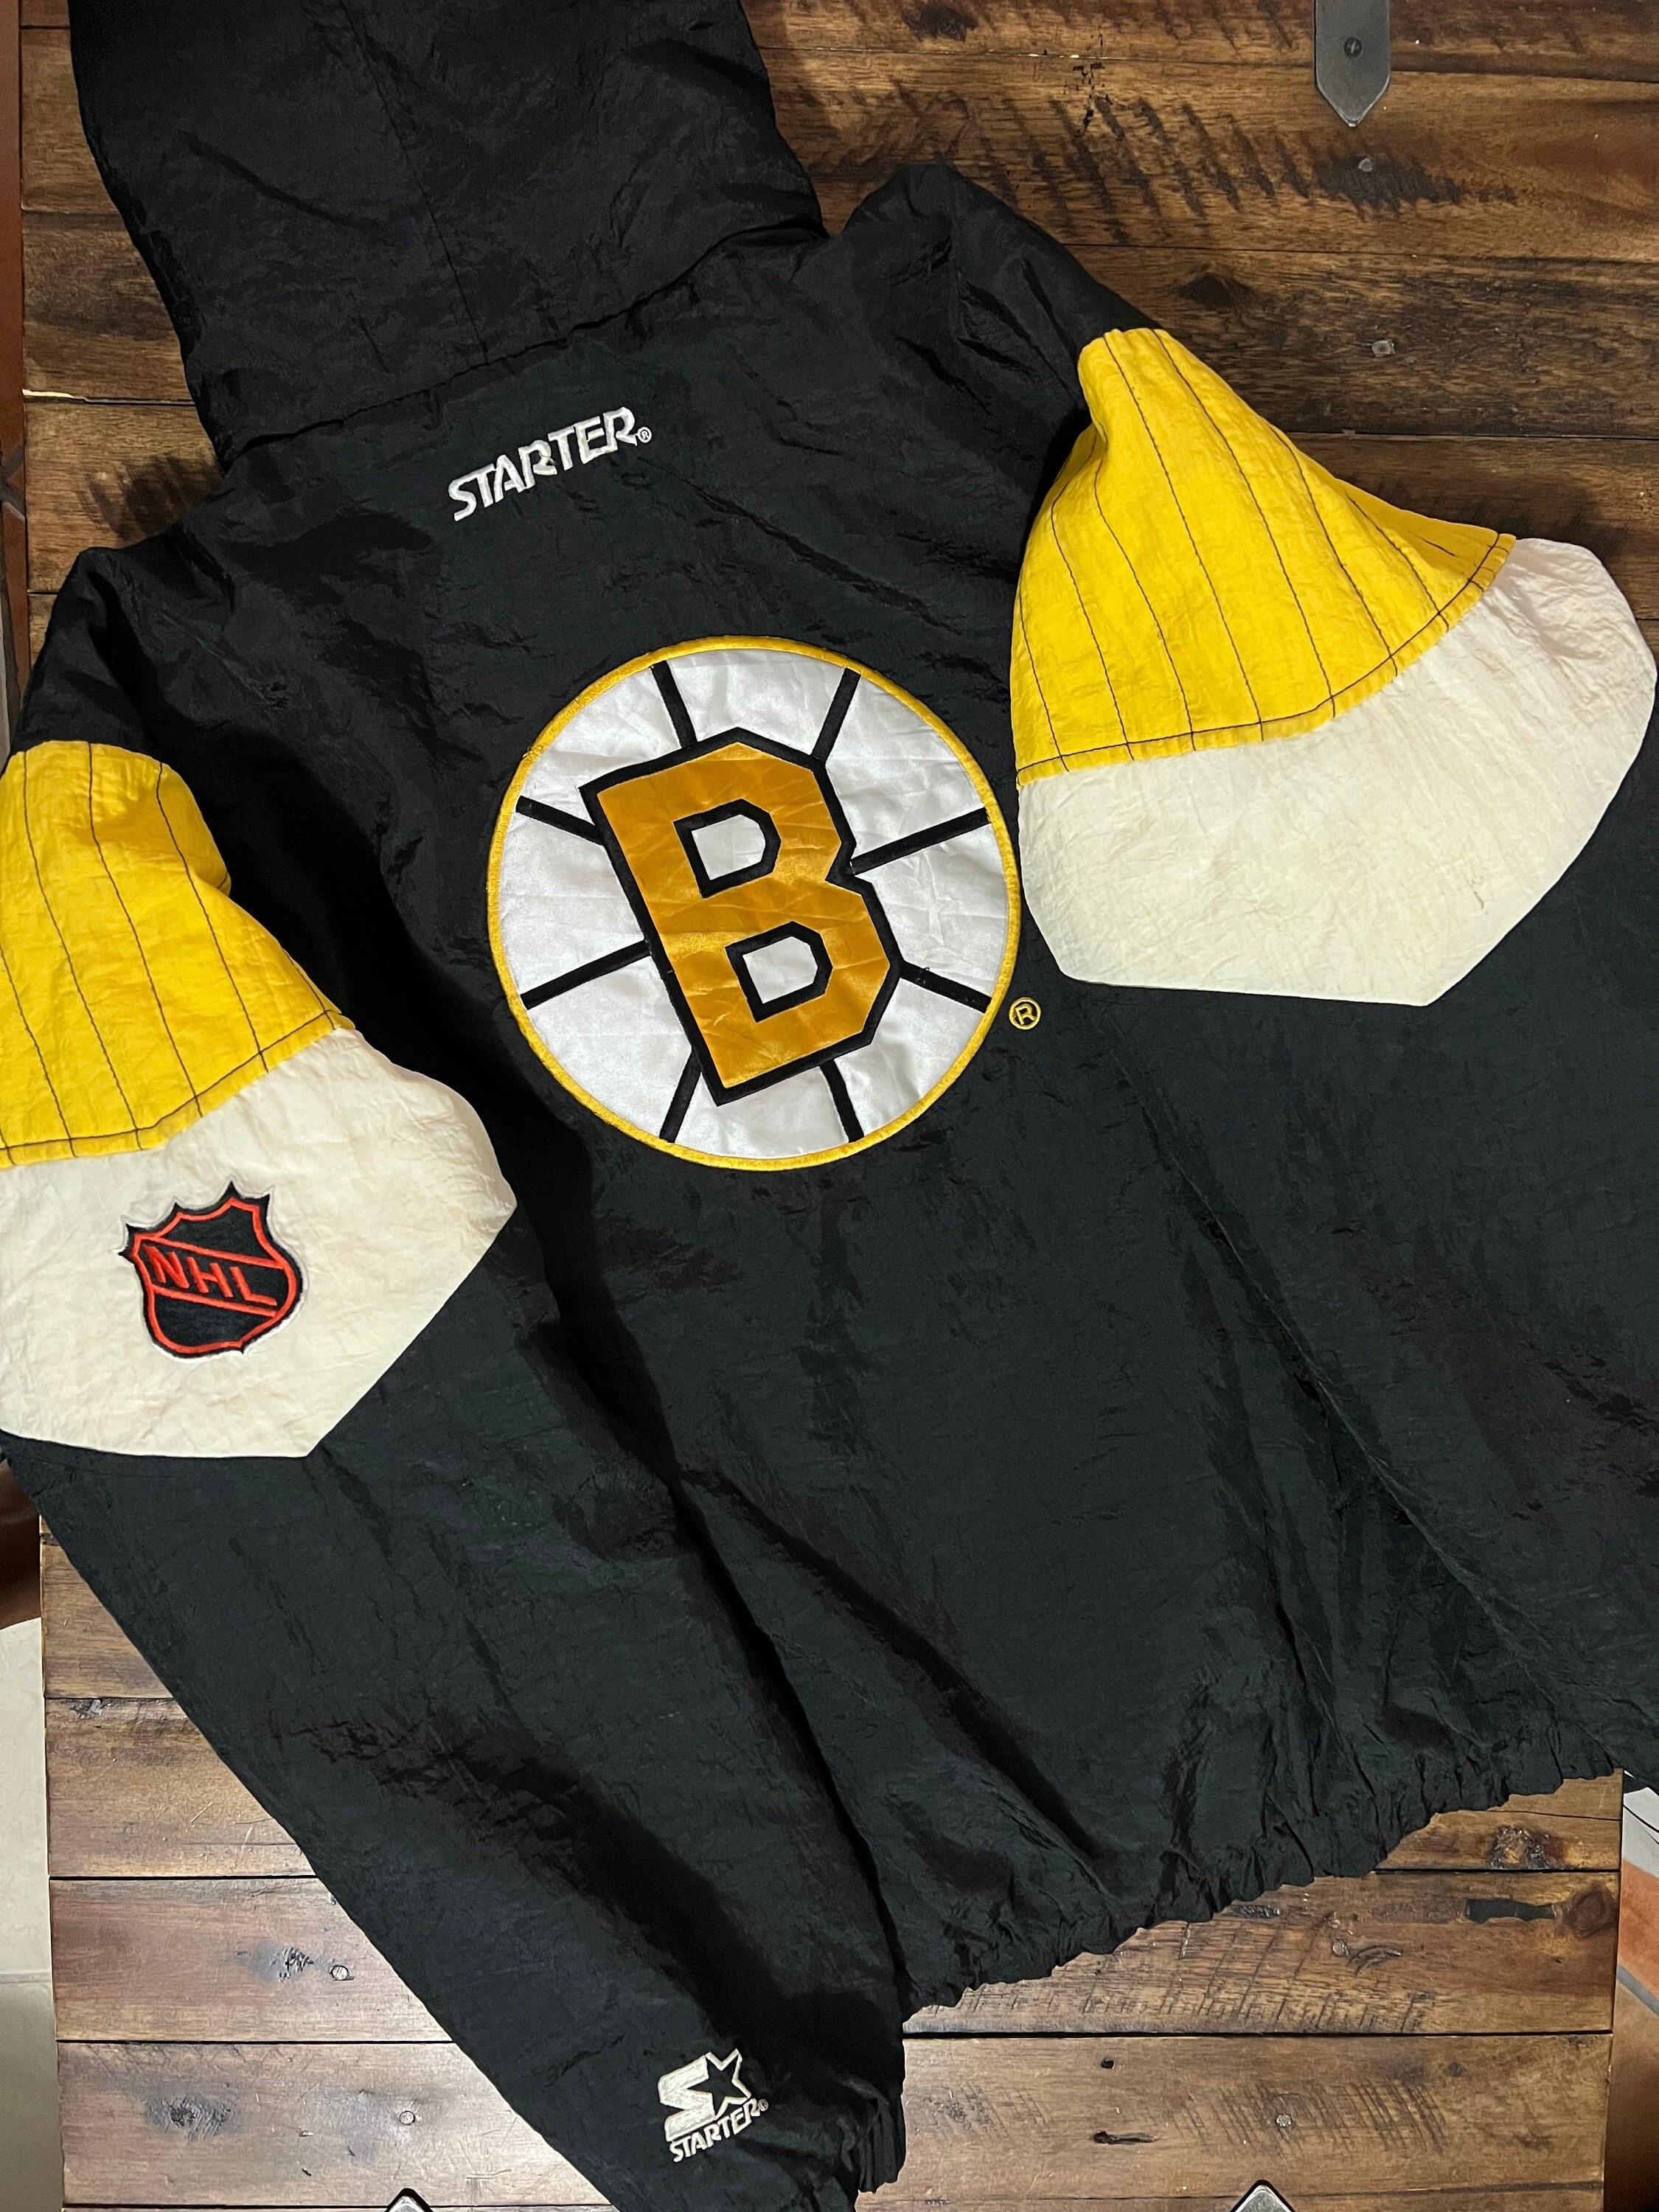 Bruins my patronus is a bruin bear angry Boston Bruins shirt, hoodie,  longsleeve, sweater